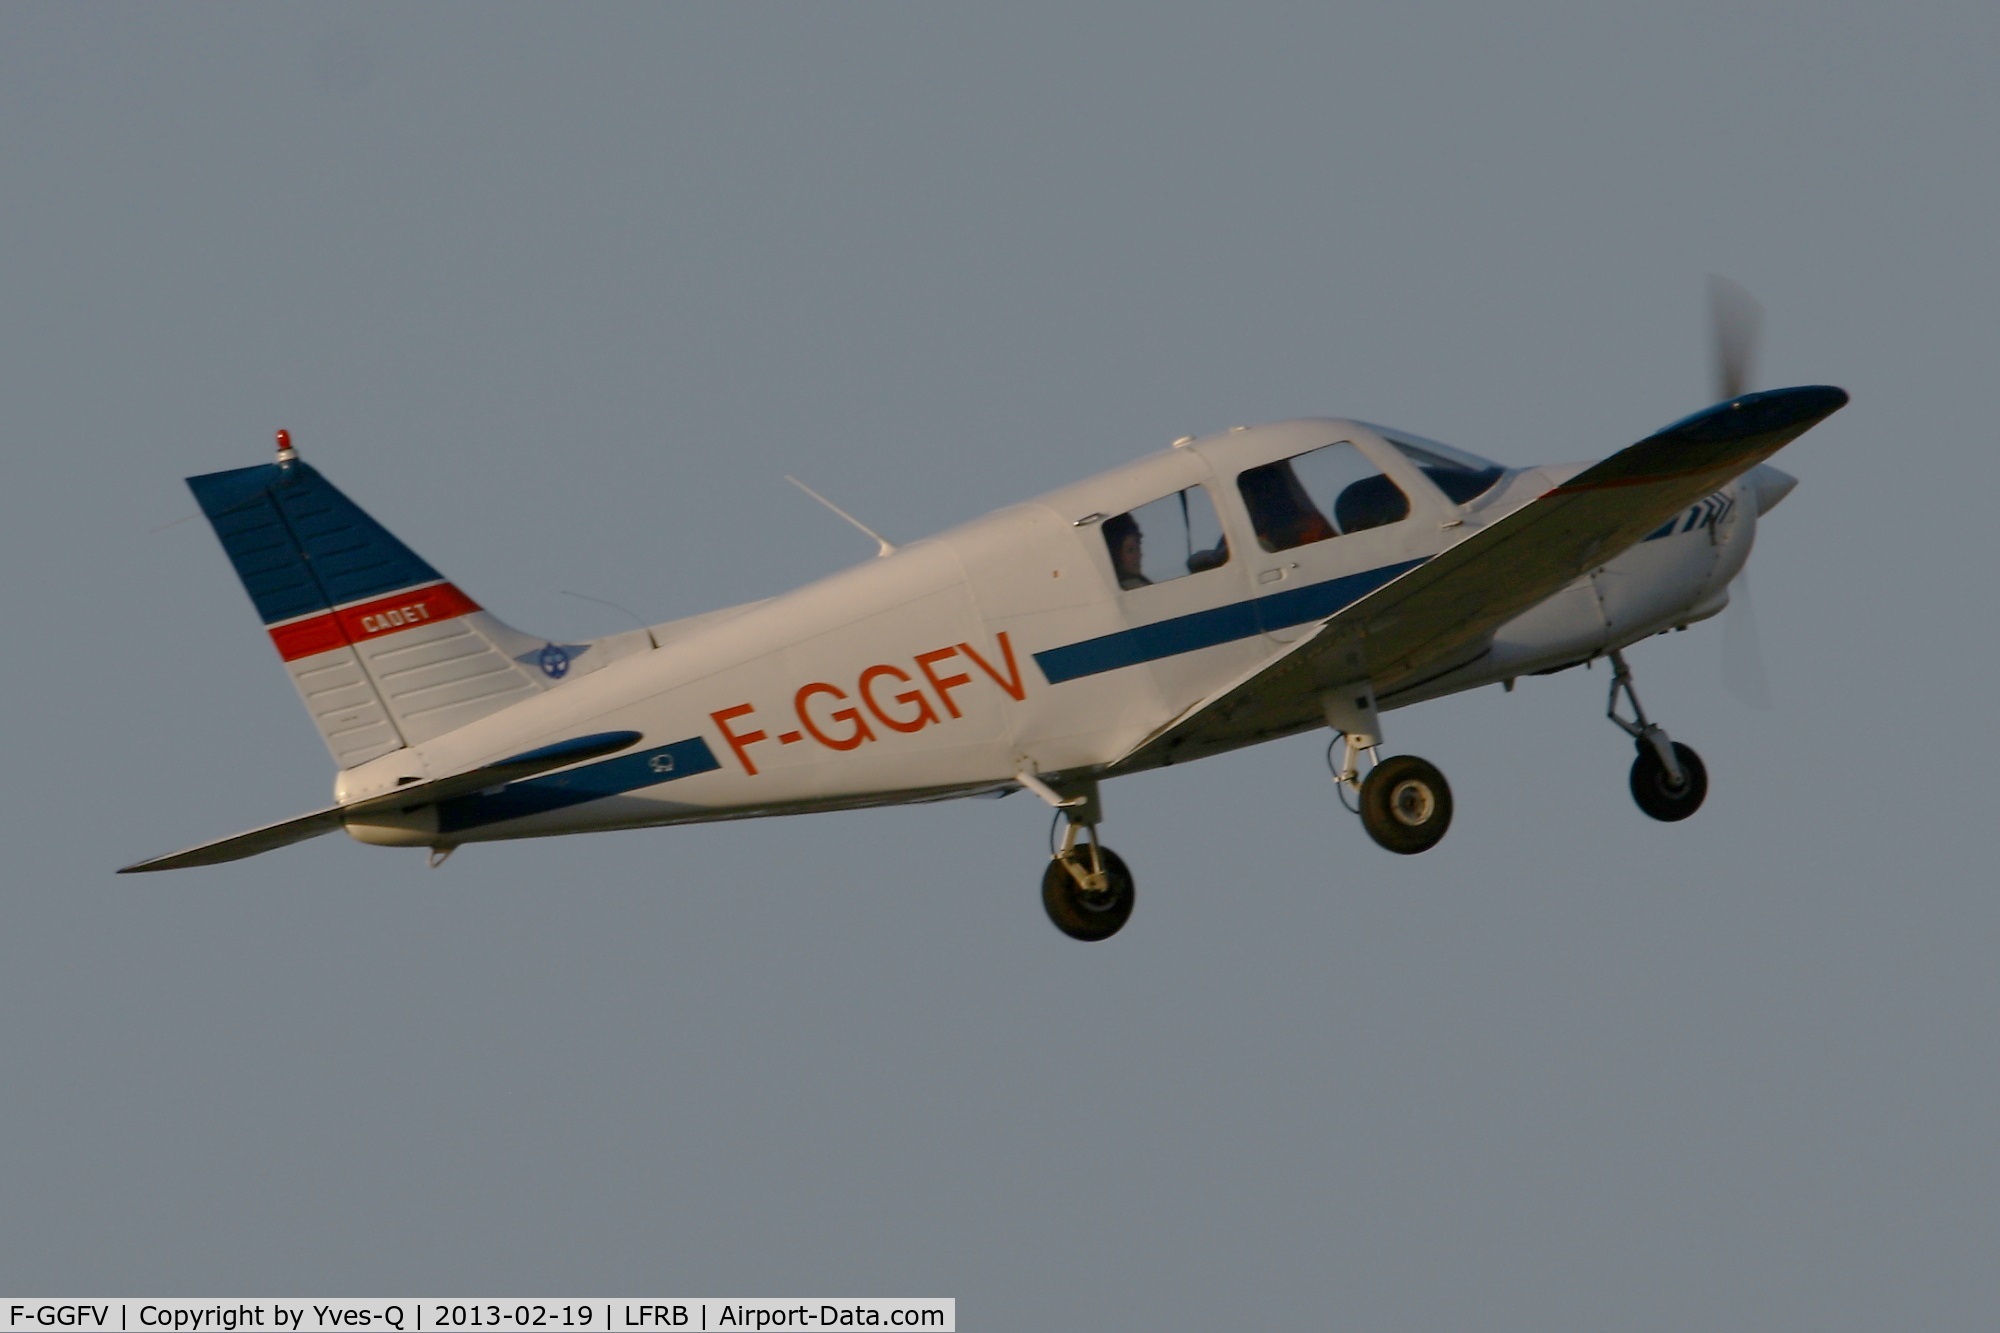 F-GGFV, Piper PA-28-161 Warrior II C/N 28-41077, Piper PA-28-161 Warrior II, Take off rwy 07R, Brest-Guipavas Regional Airport (LFRB-BES)